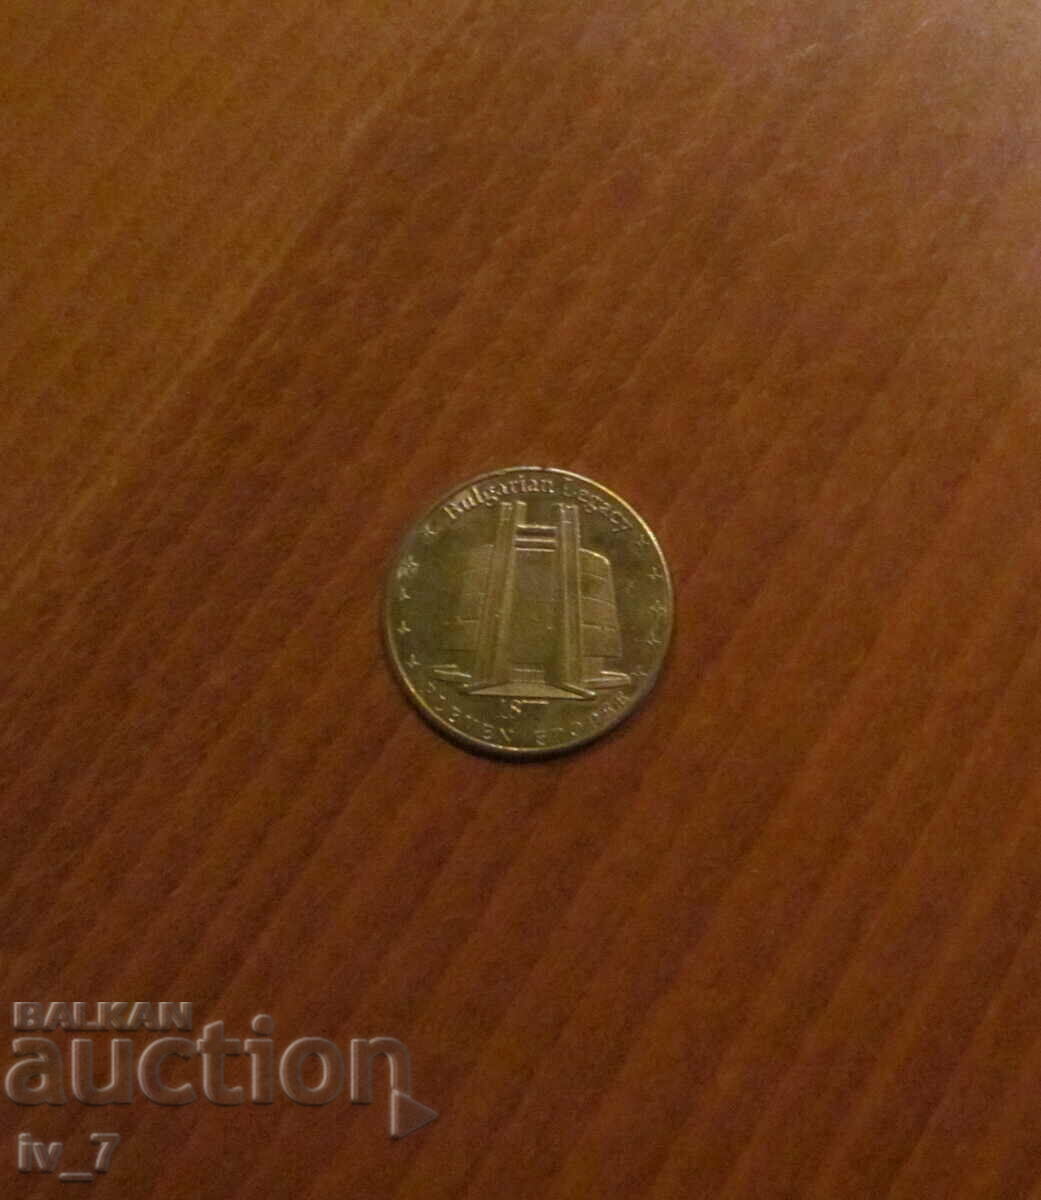 Monedă suvenir din seria „Bulgarian Heritage” - PLEVEN